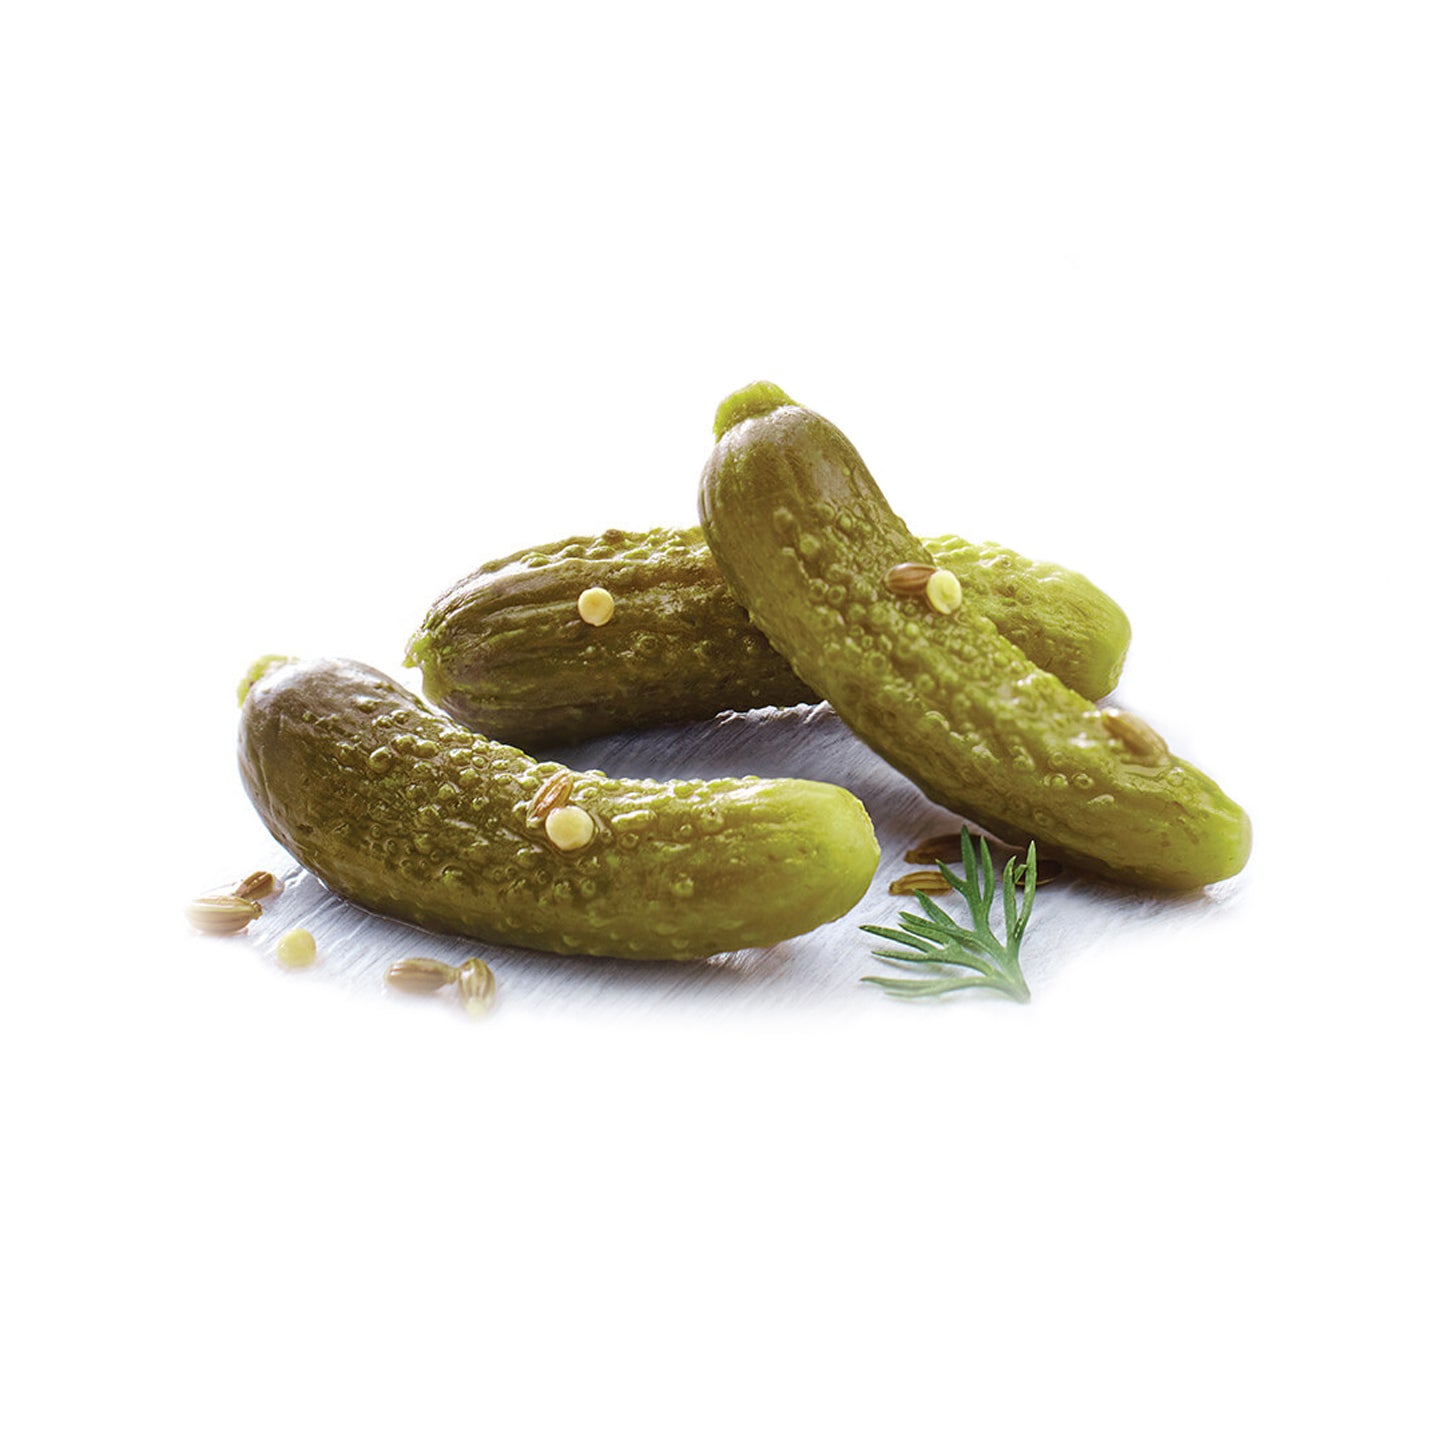 Garnish - Snacking Pickles